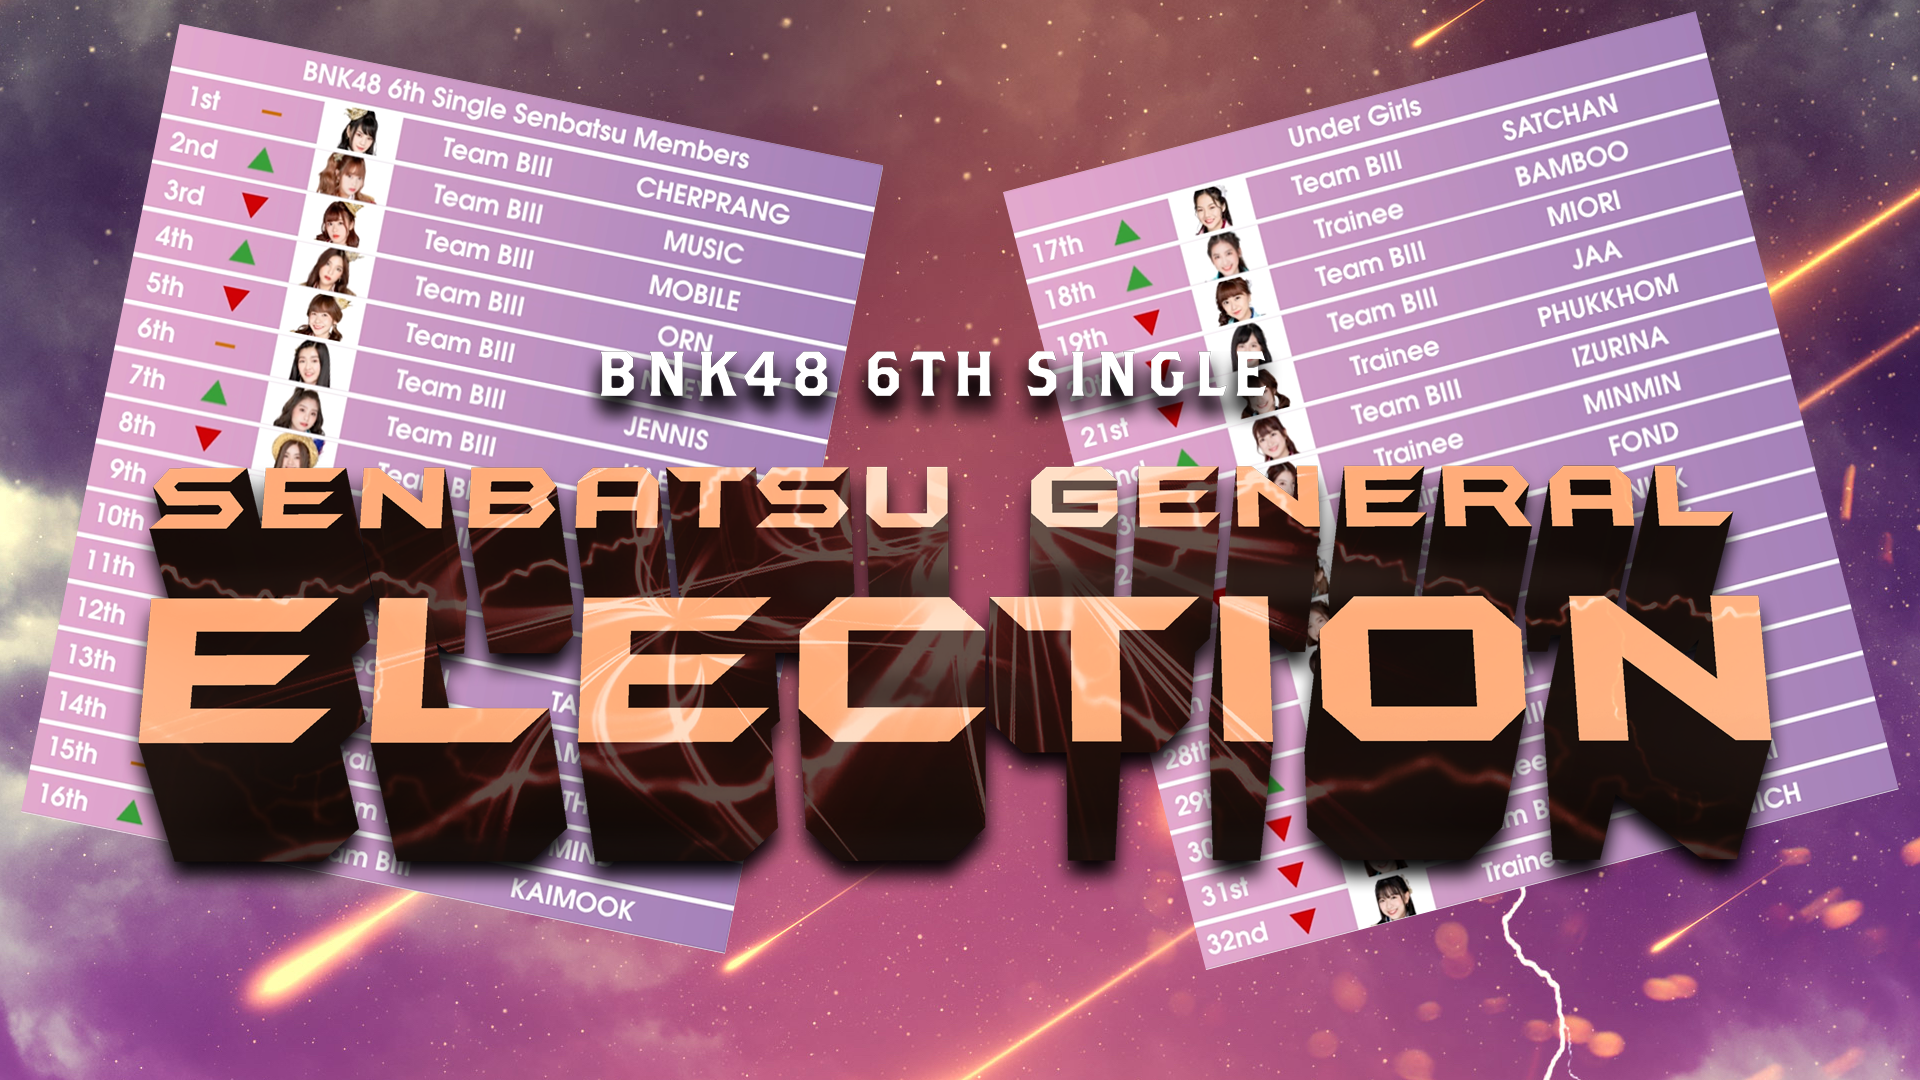 BNK48 เซอร์ไพรส์ประกาศผลคะแนนโค้งสุดท้าย 6th Single Senbatsu General Election